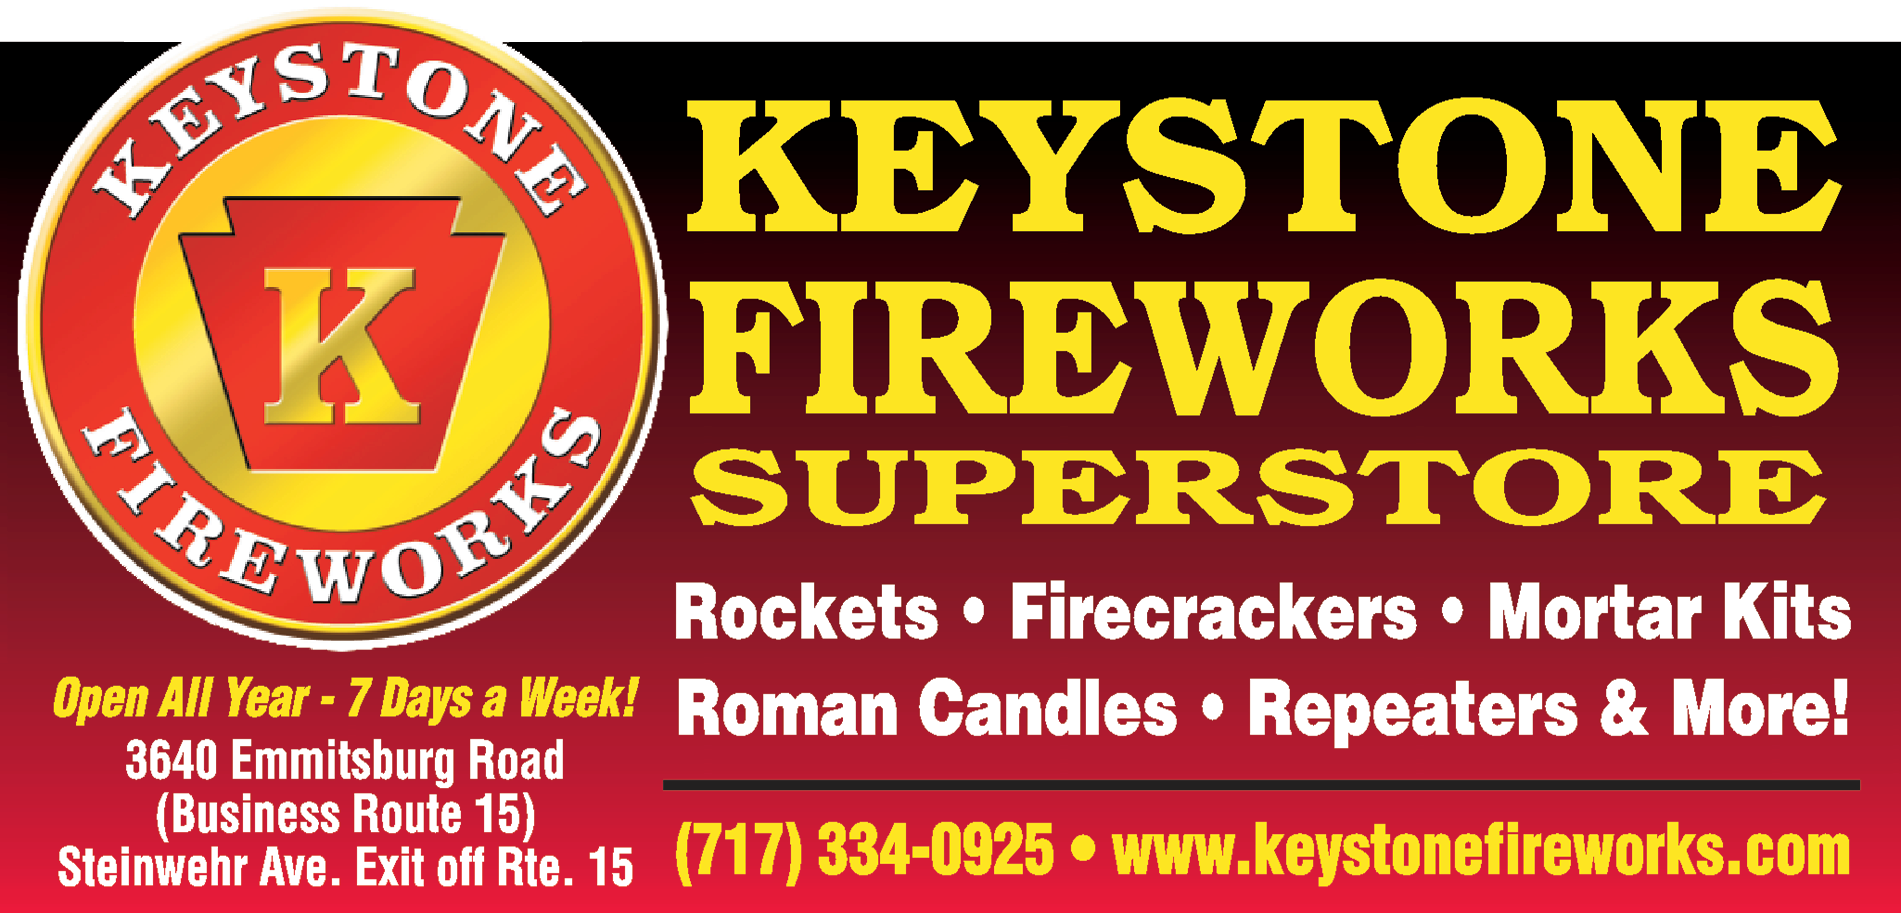 Keystone Fireworks Superstore Print Ad